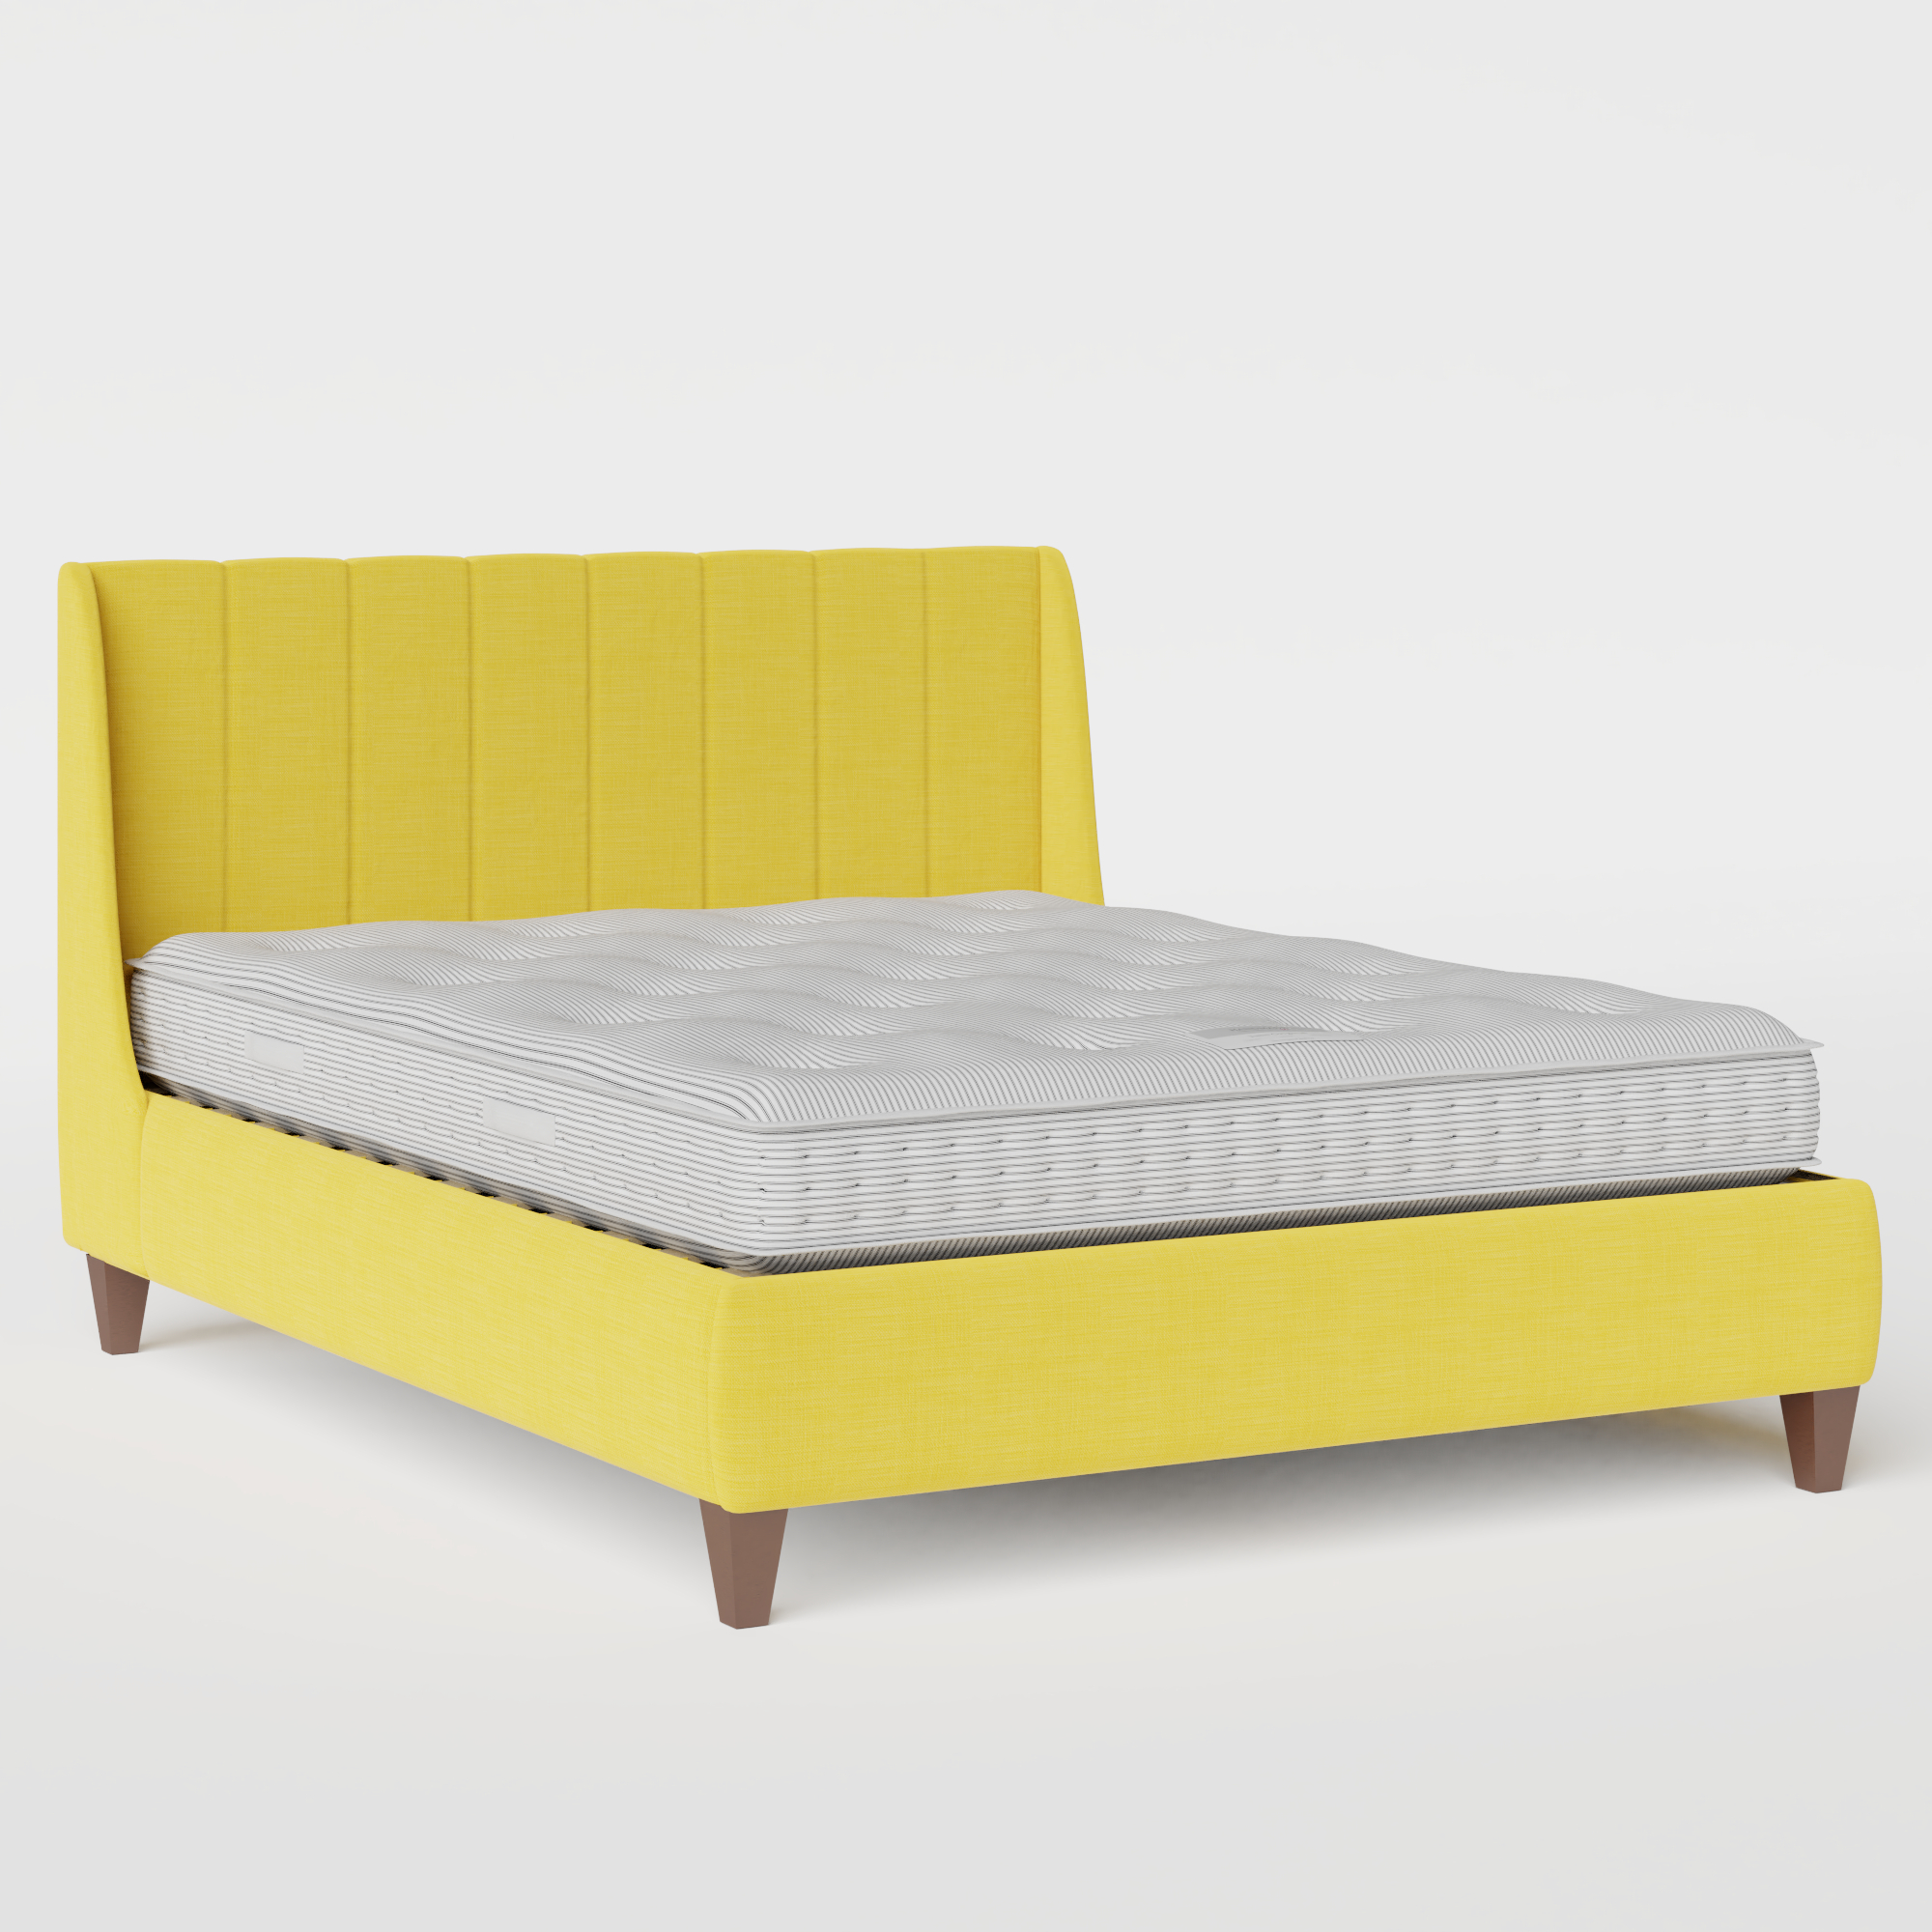 Sunderland Pleated upholstered bed in sunflower fabric